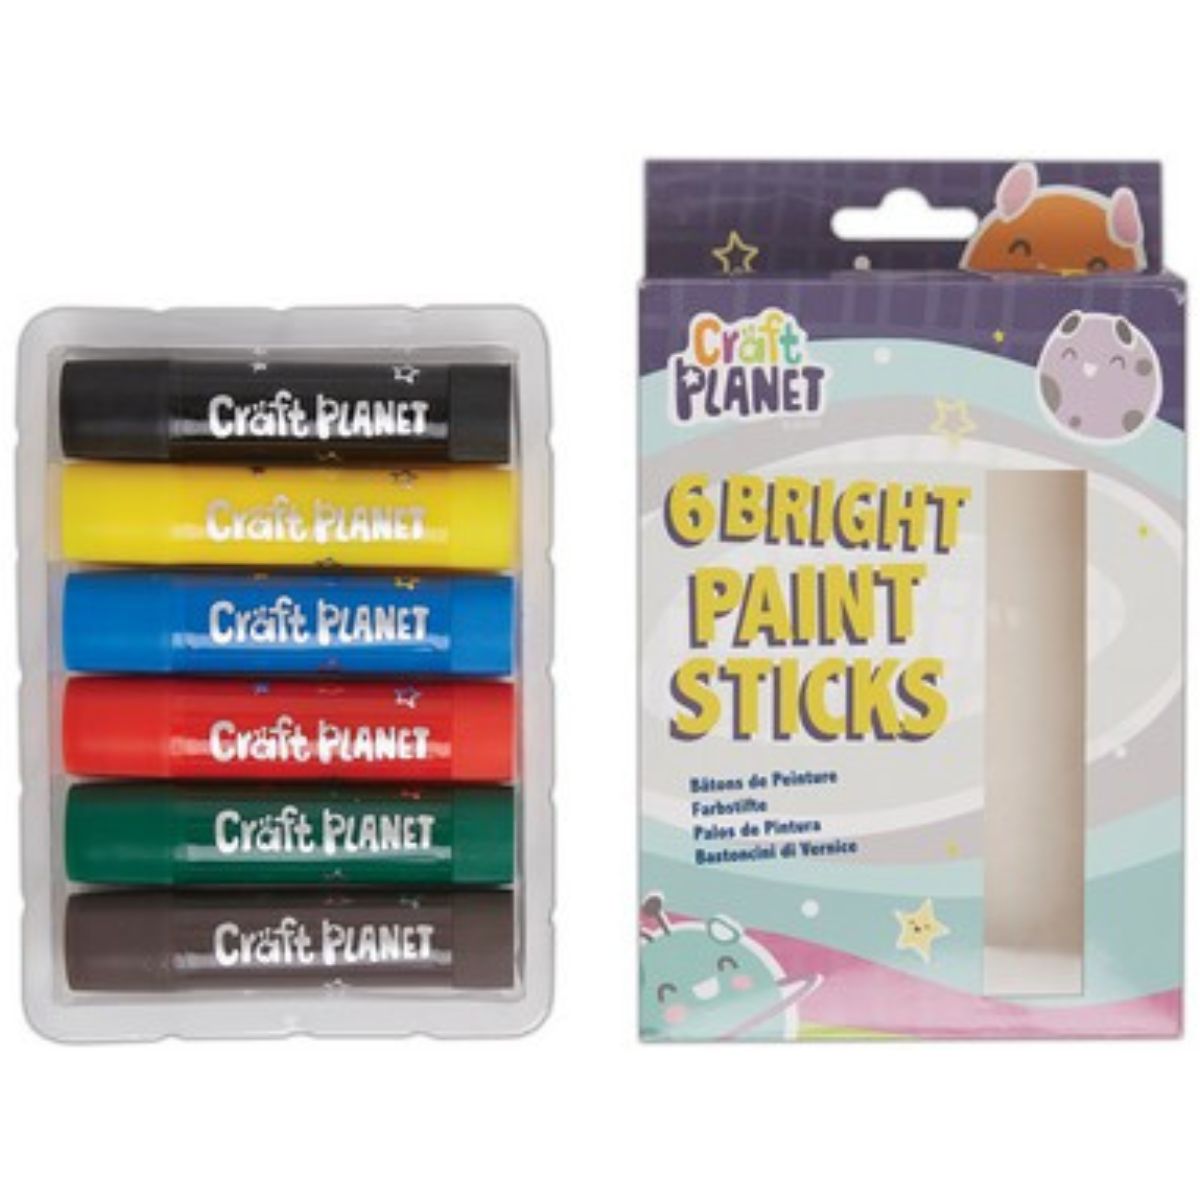 6 Paint Sticks, Bright